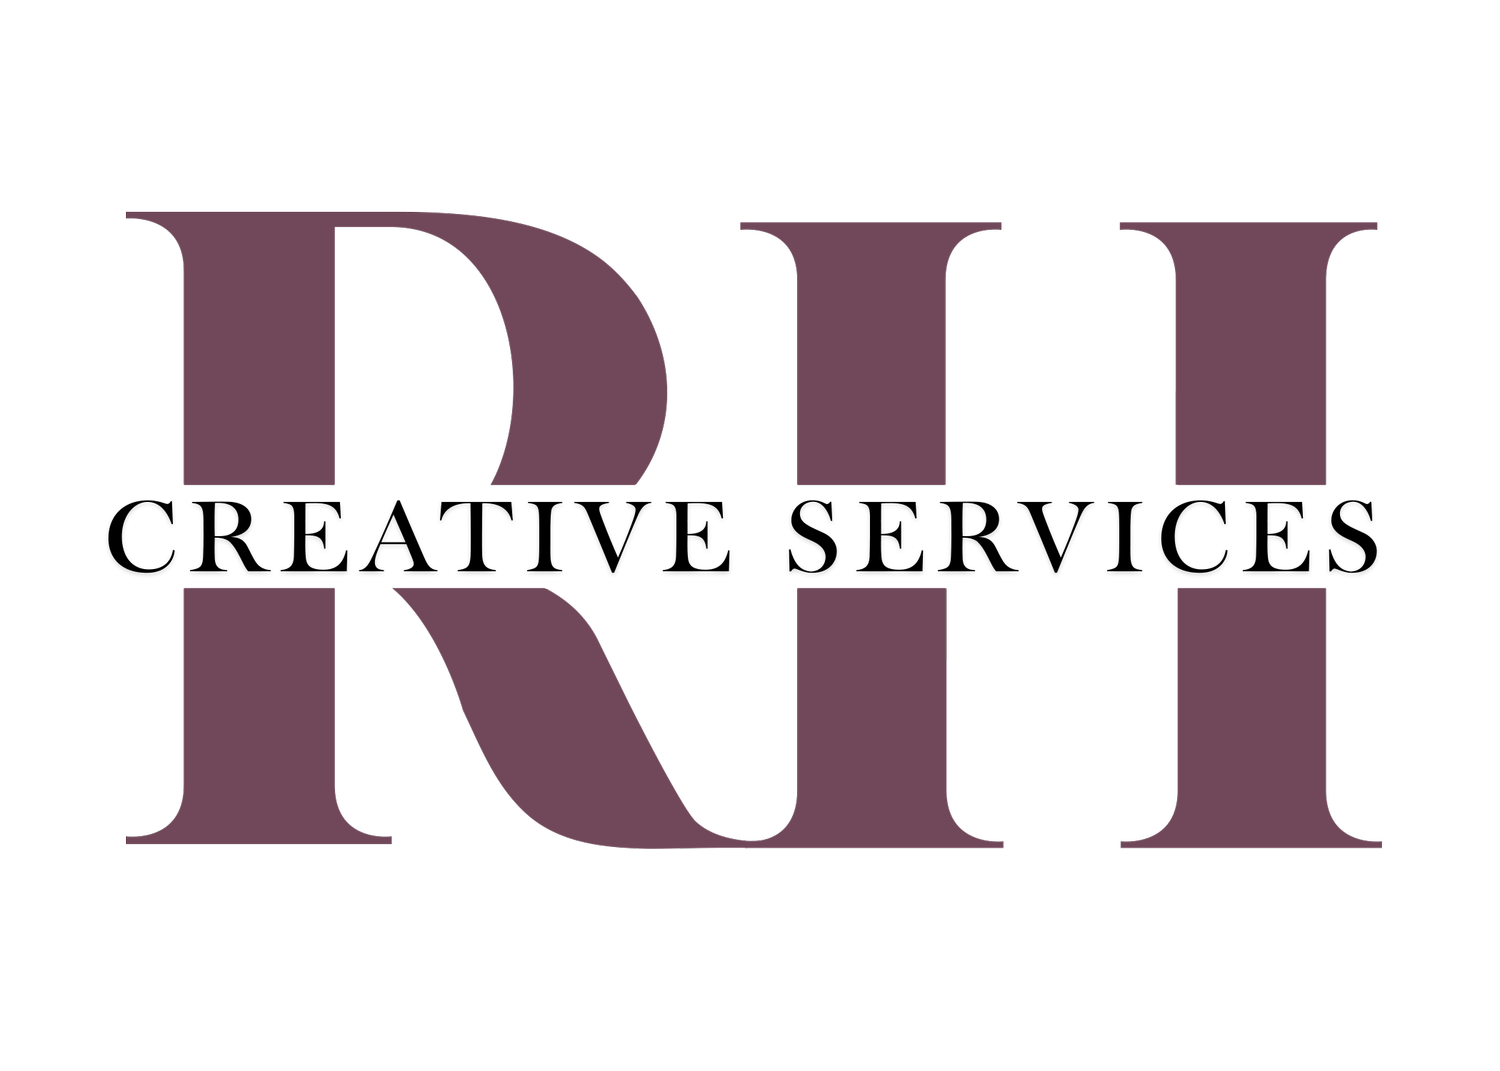 RH Creative Services